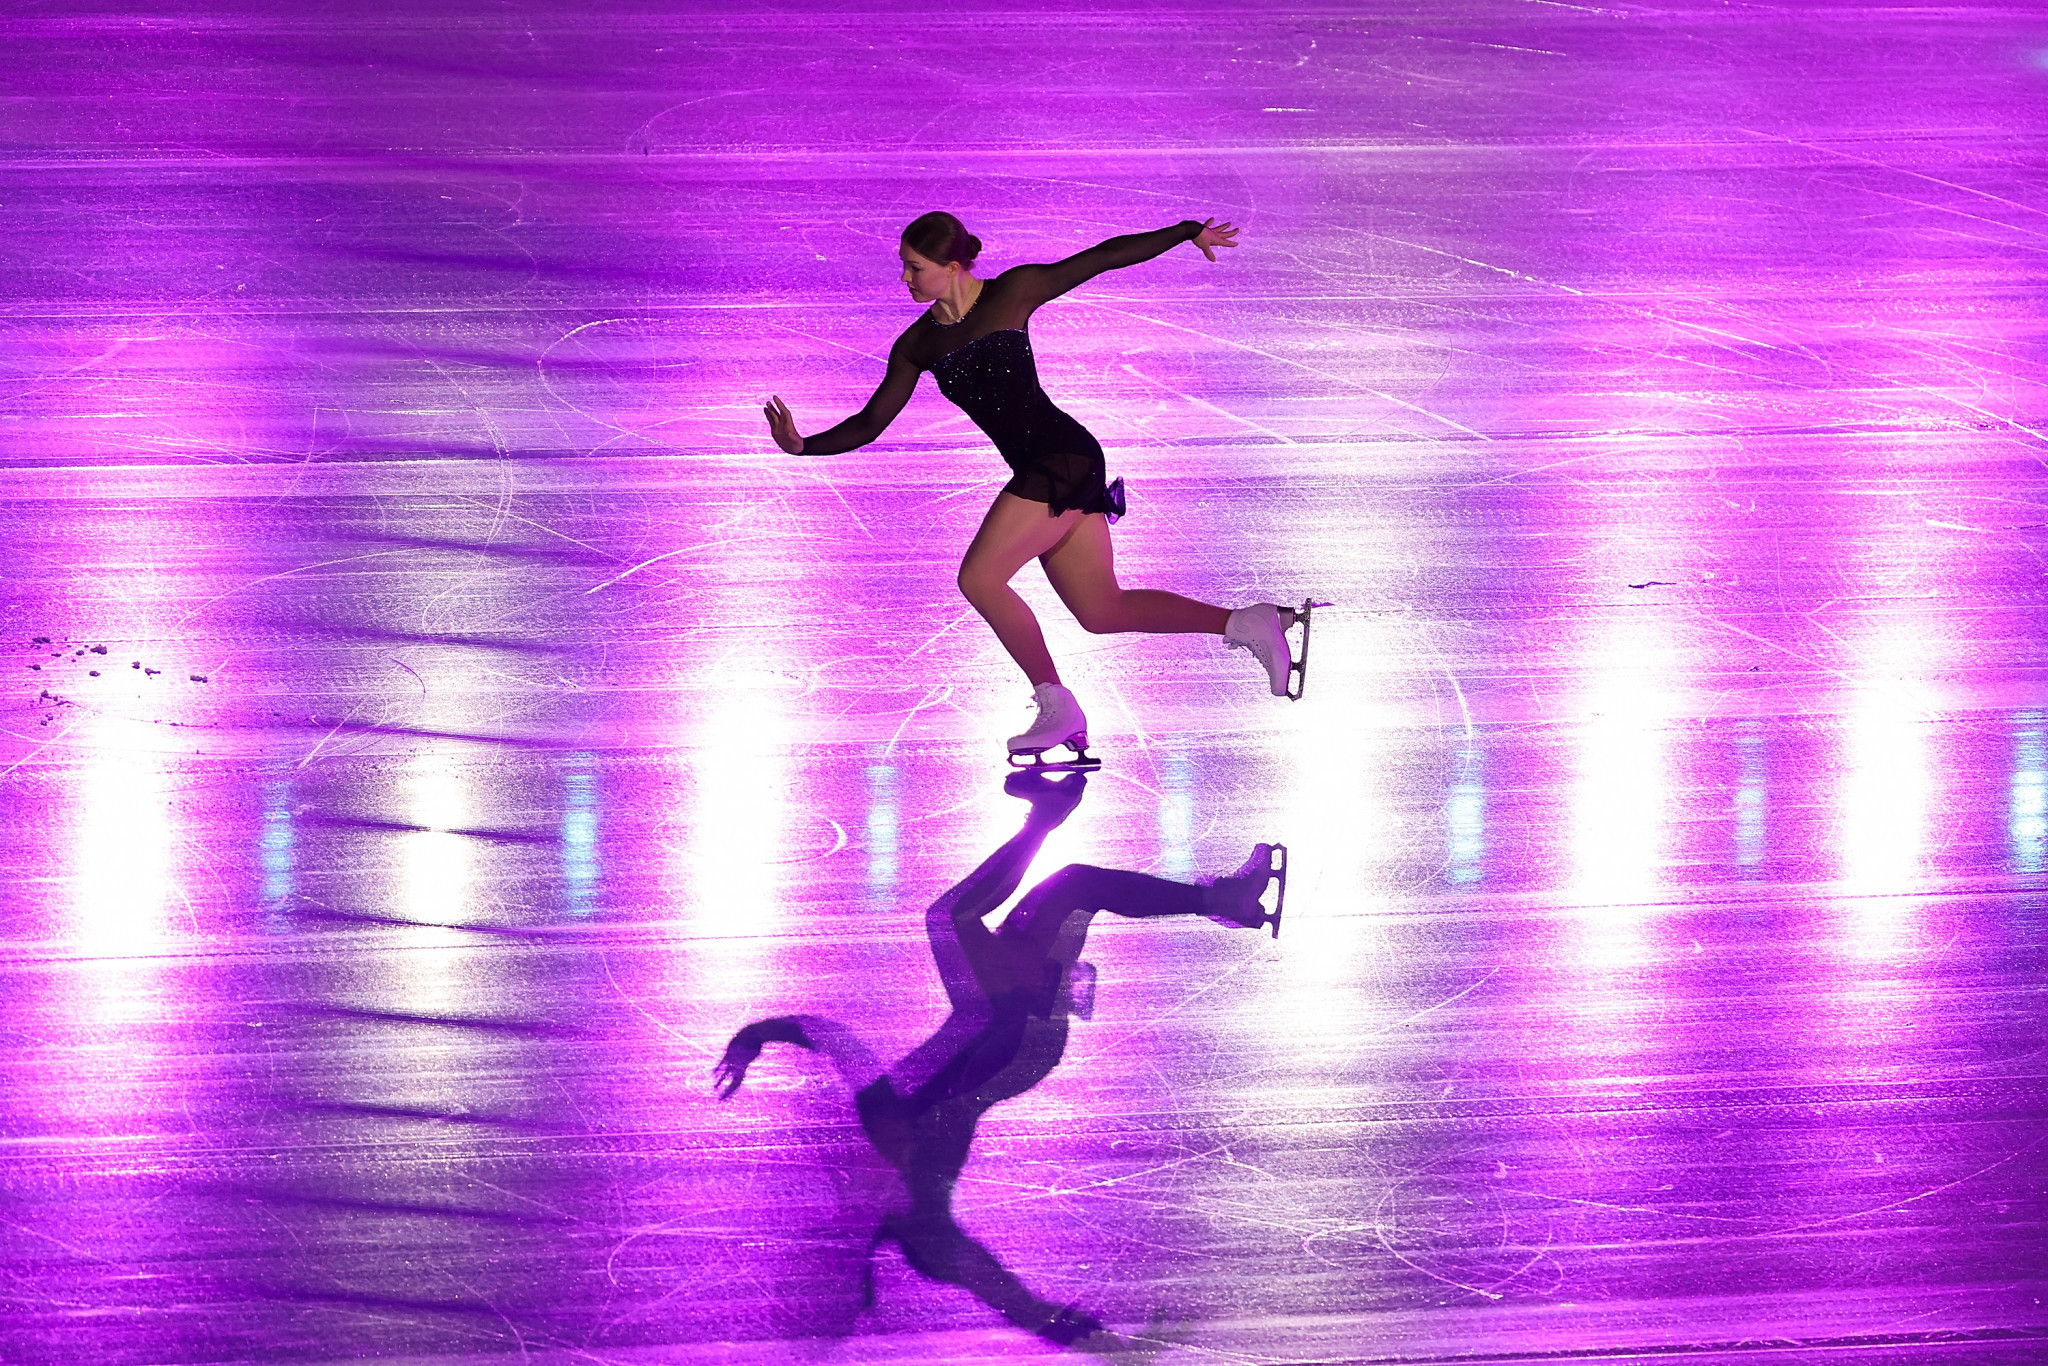 Finland replaces Russia as host of sixth leg of ISU Figure Skating Grand Prix 